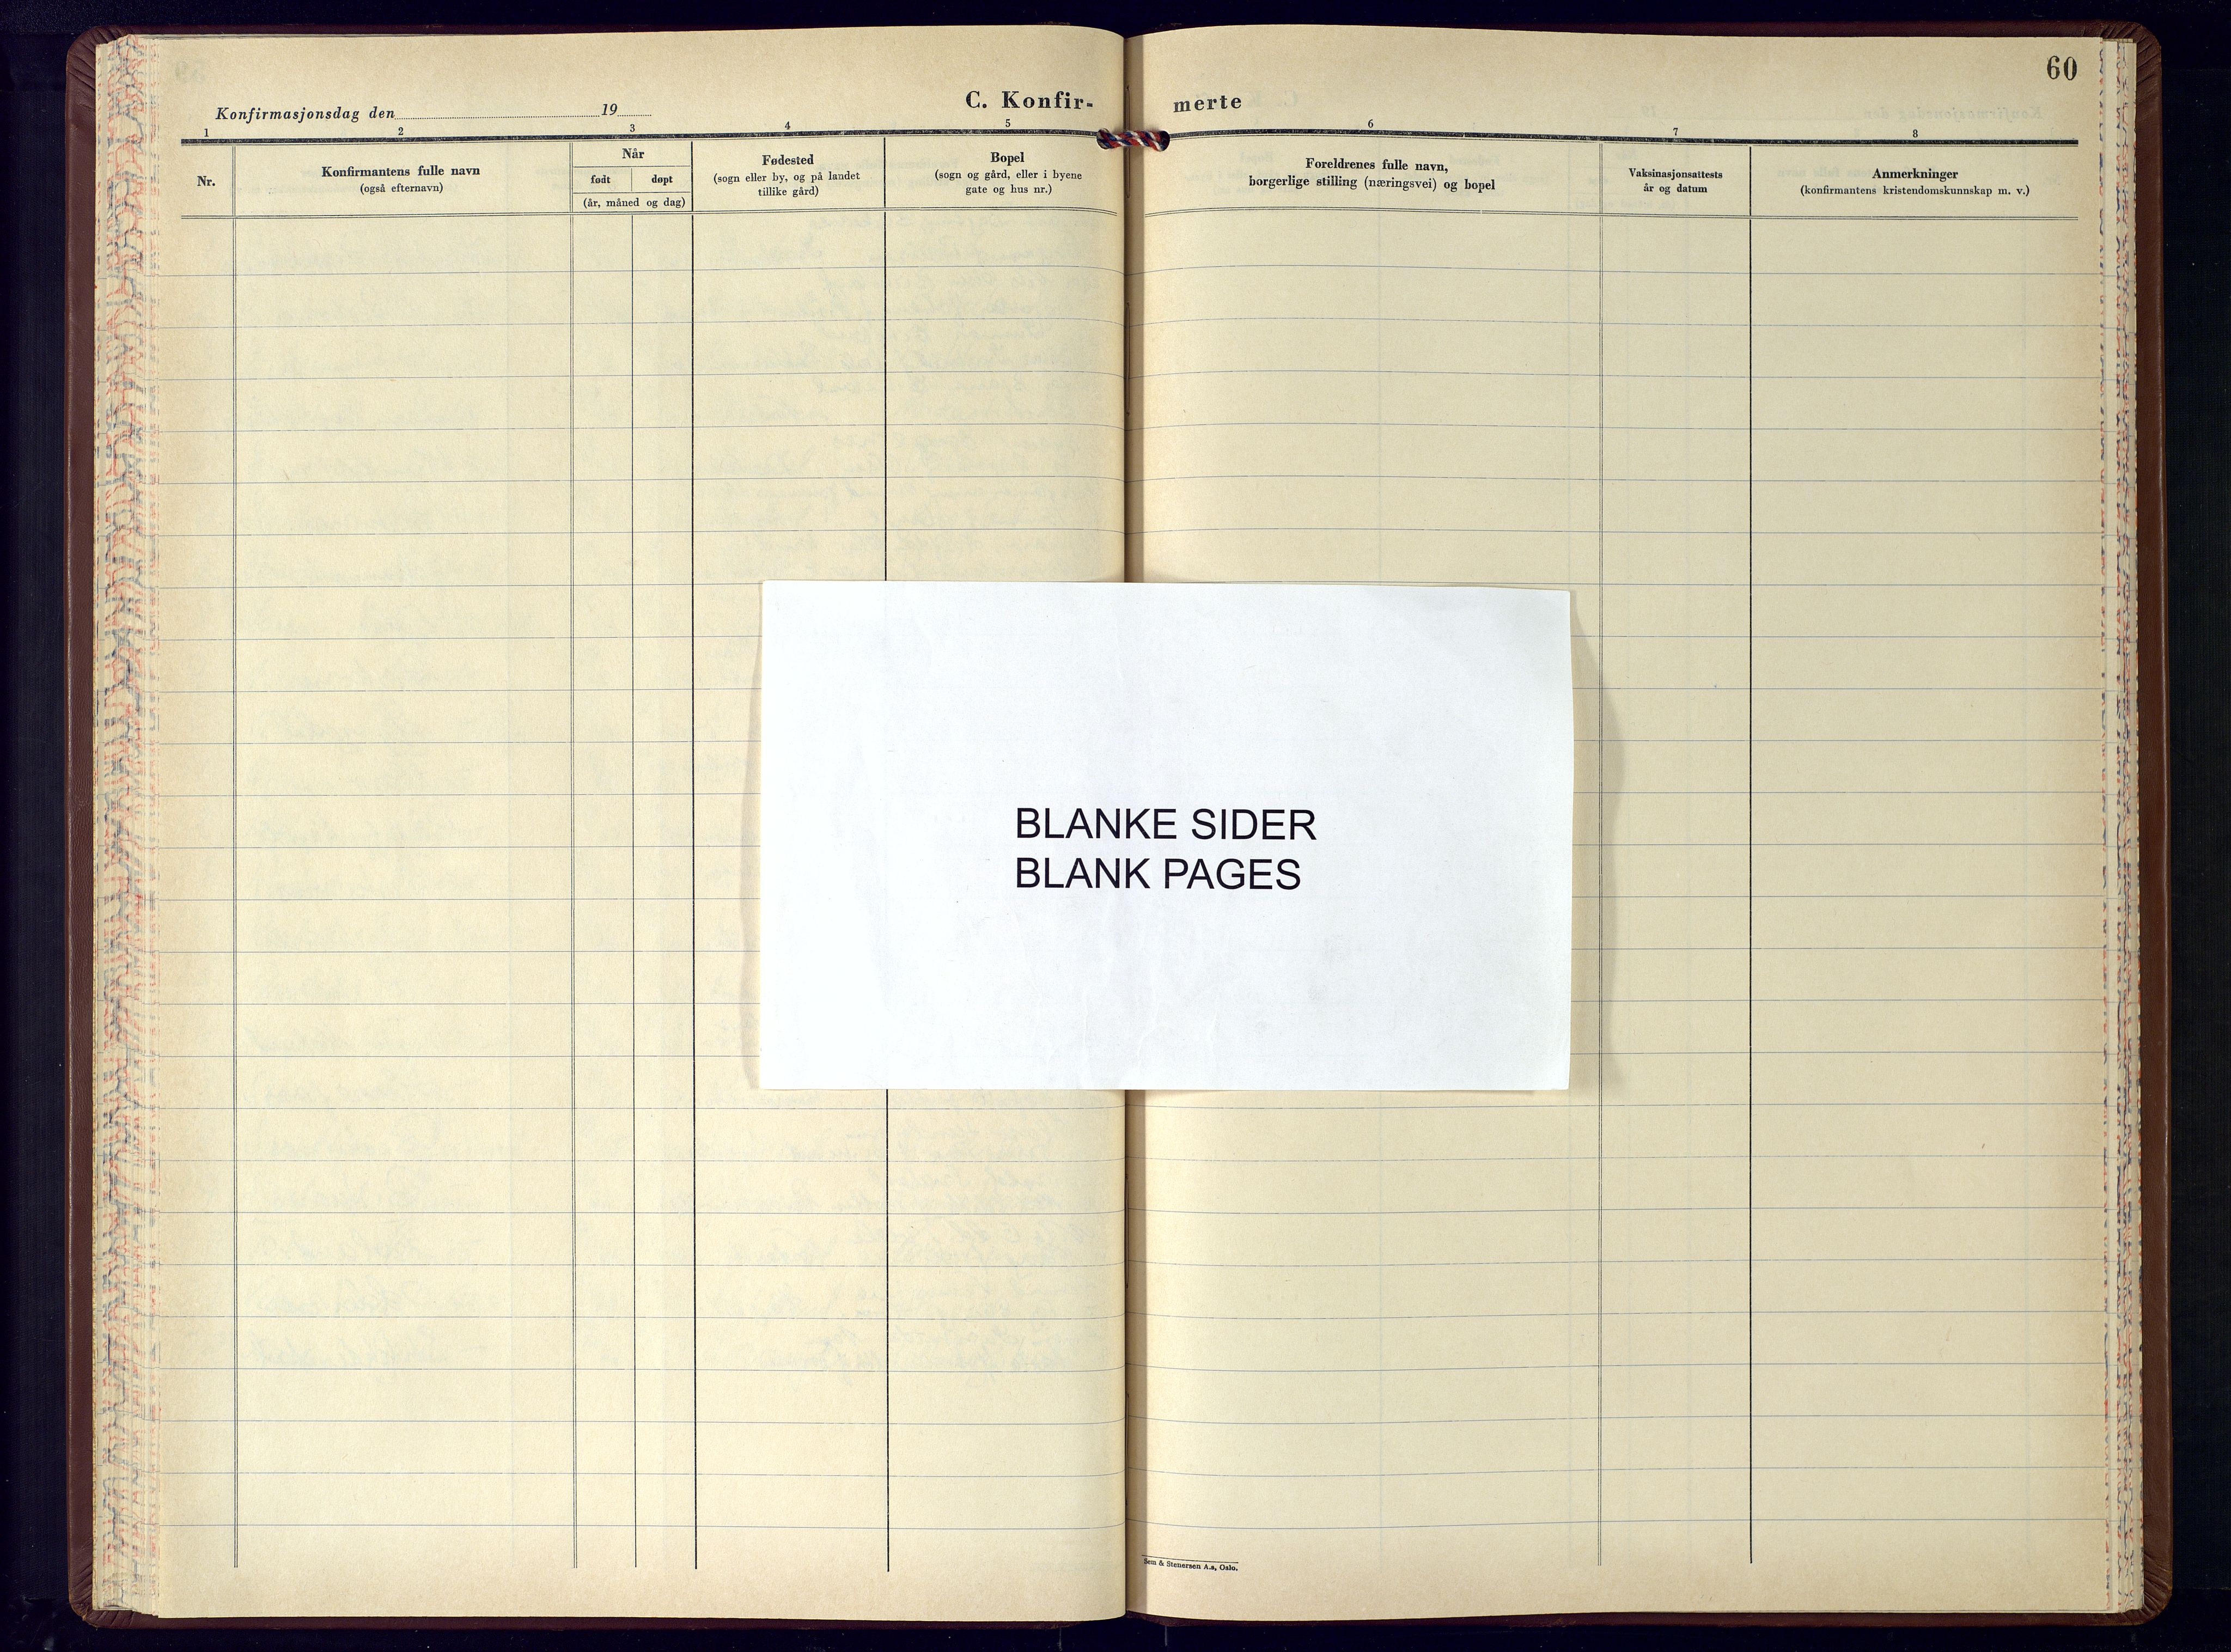 Birkenes sokneprestkontor, SAK/1111-0004/F/Fb/L0007: Klokkerbok nr. B-7, 1950-1981